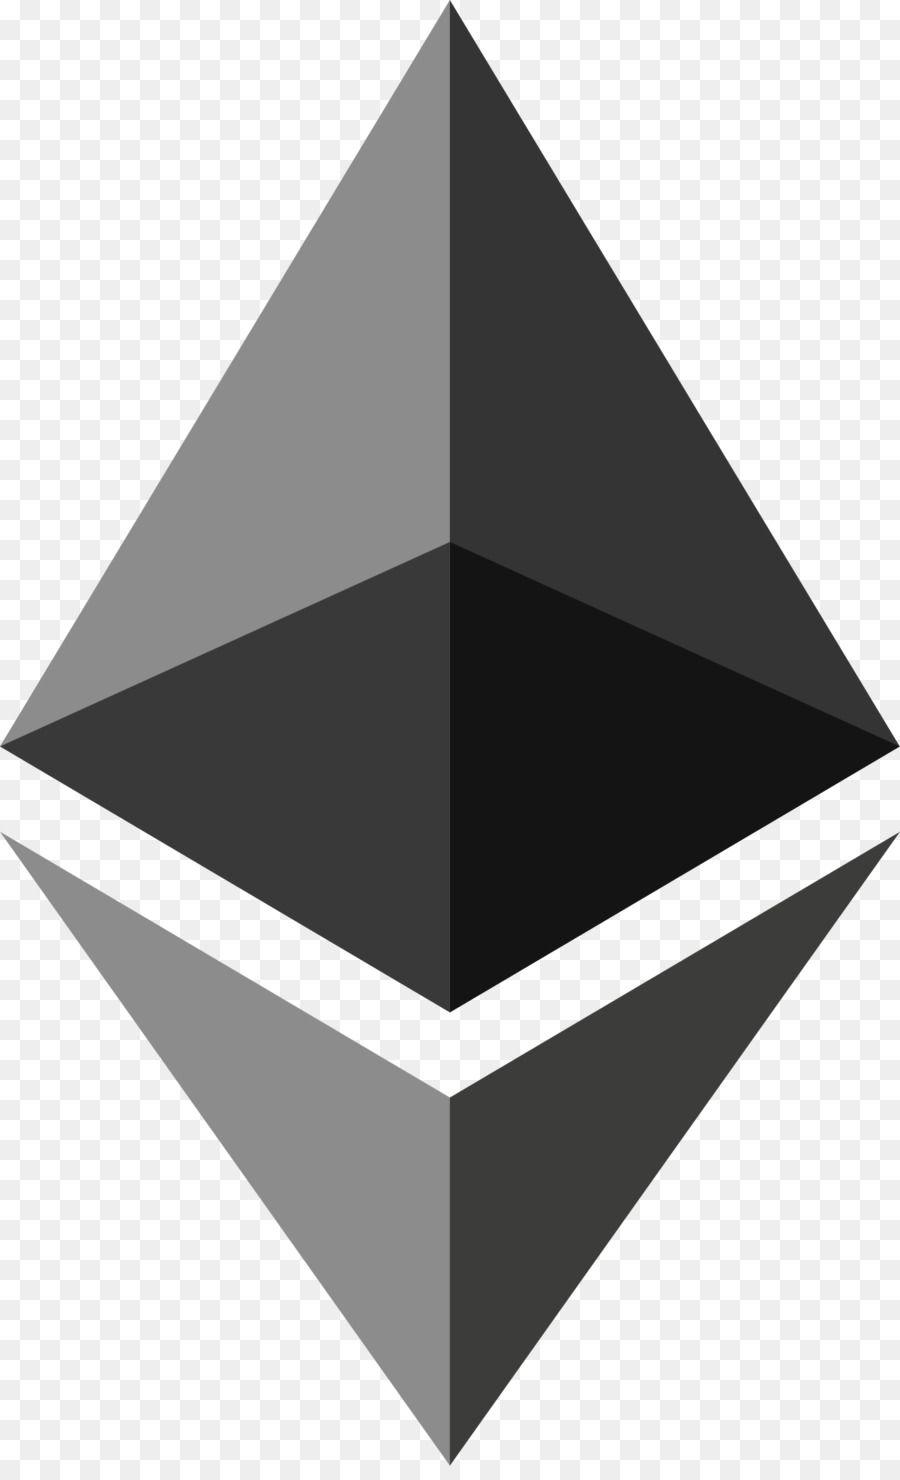 Etherium Blockchain Logo - Ethereum Blockchain Cryptocurrency Logo stack png download